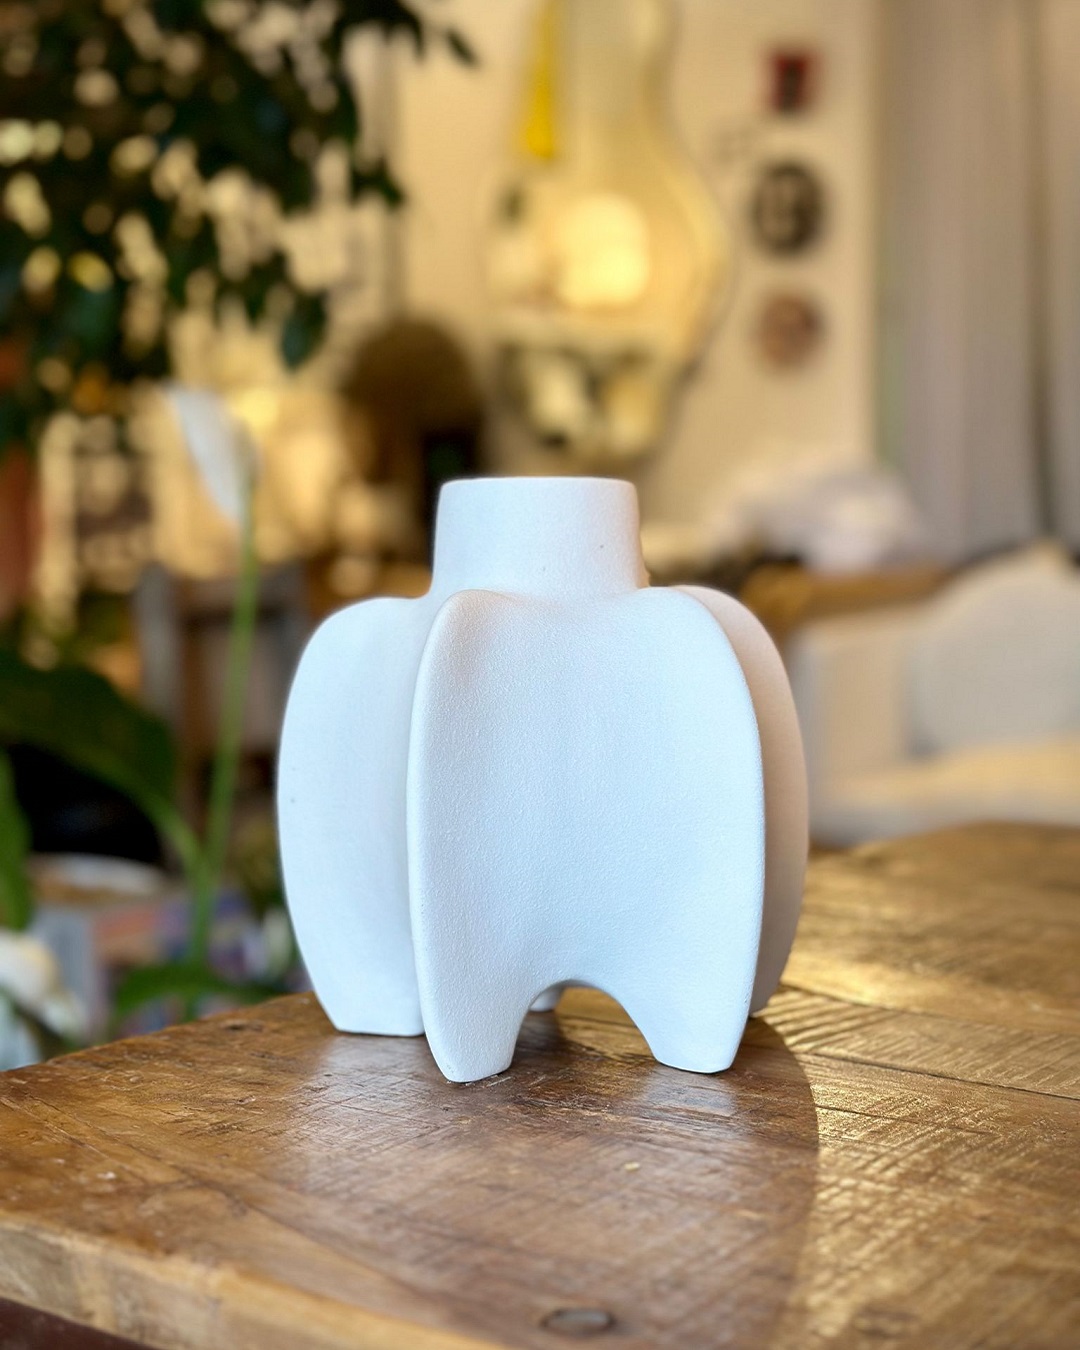 White vase on wooden table